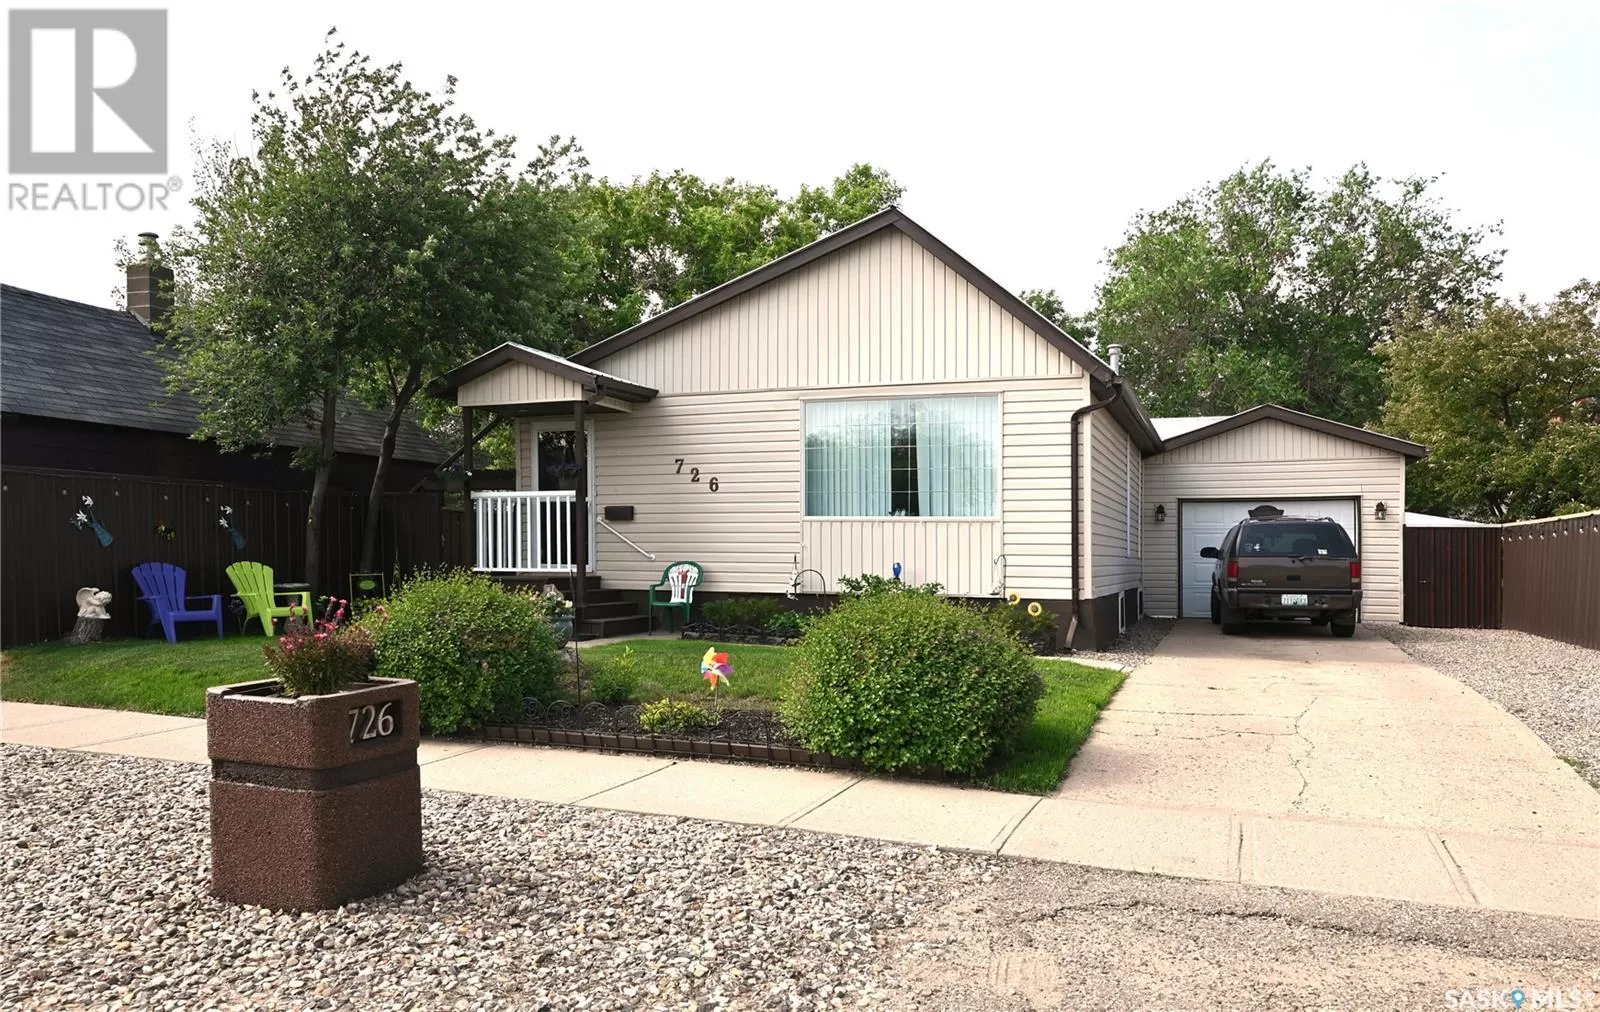 House for rent: 726 4th Street, Estevan, Saskatchewan S4A 0V7